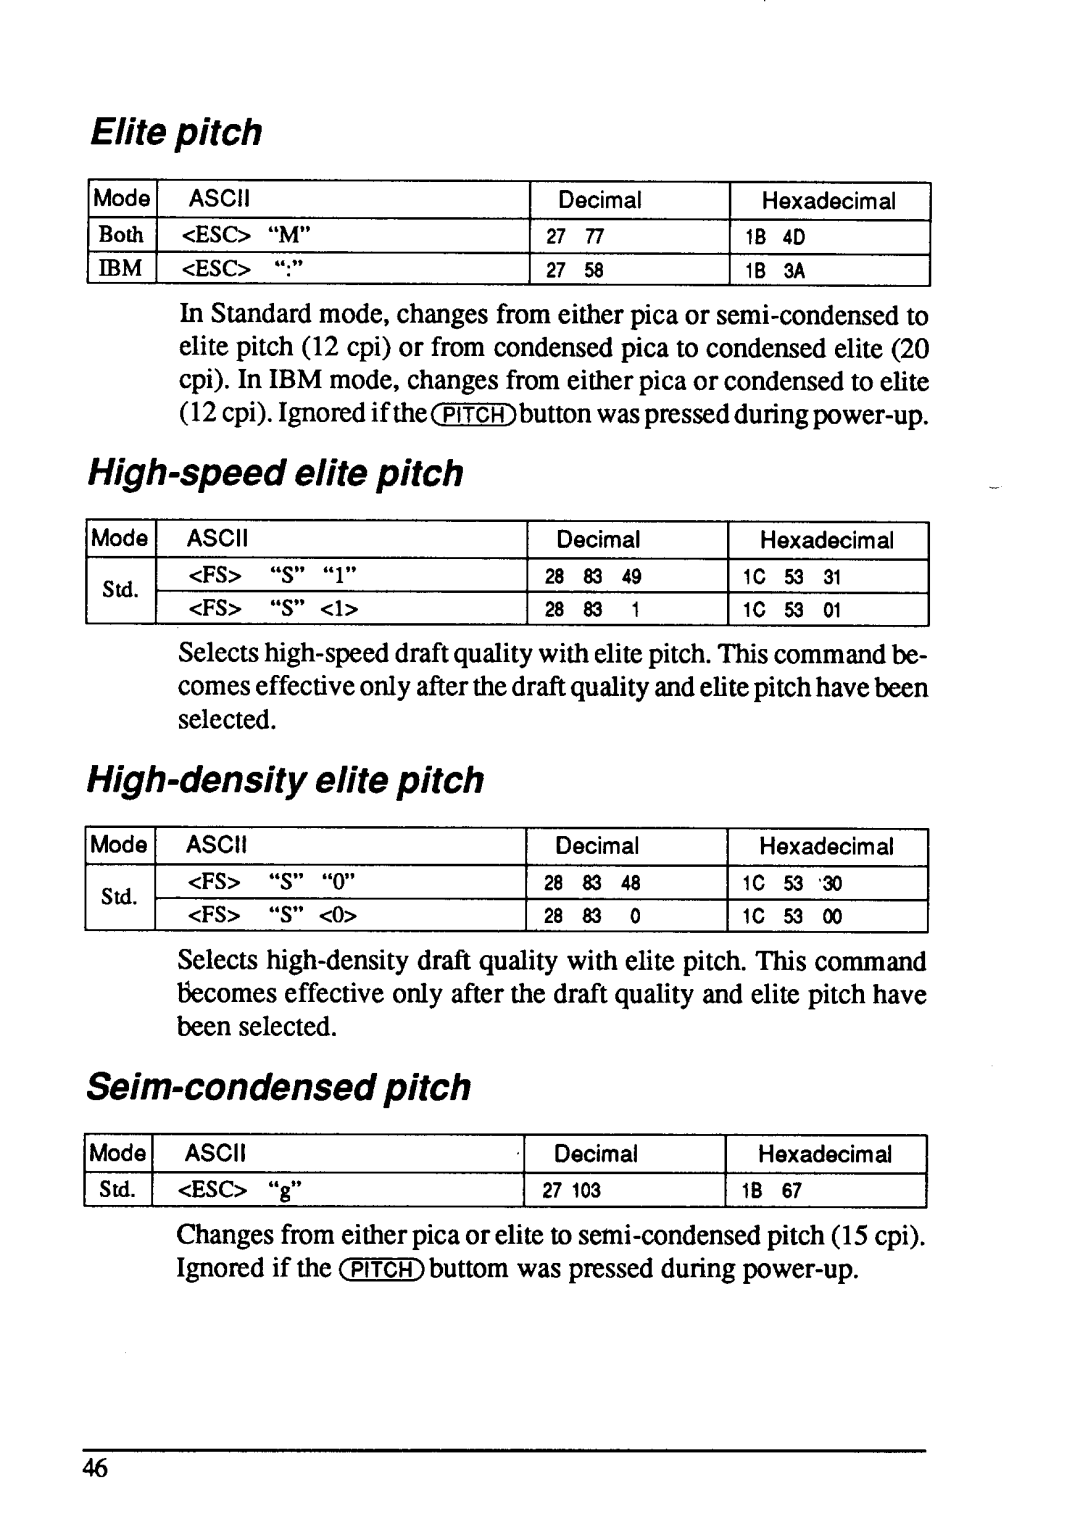 Star Micronics LC24-15 user manual Elite pitch, High-speed elite pitch, High-density elite pitch, Seim-condensed pitch 